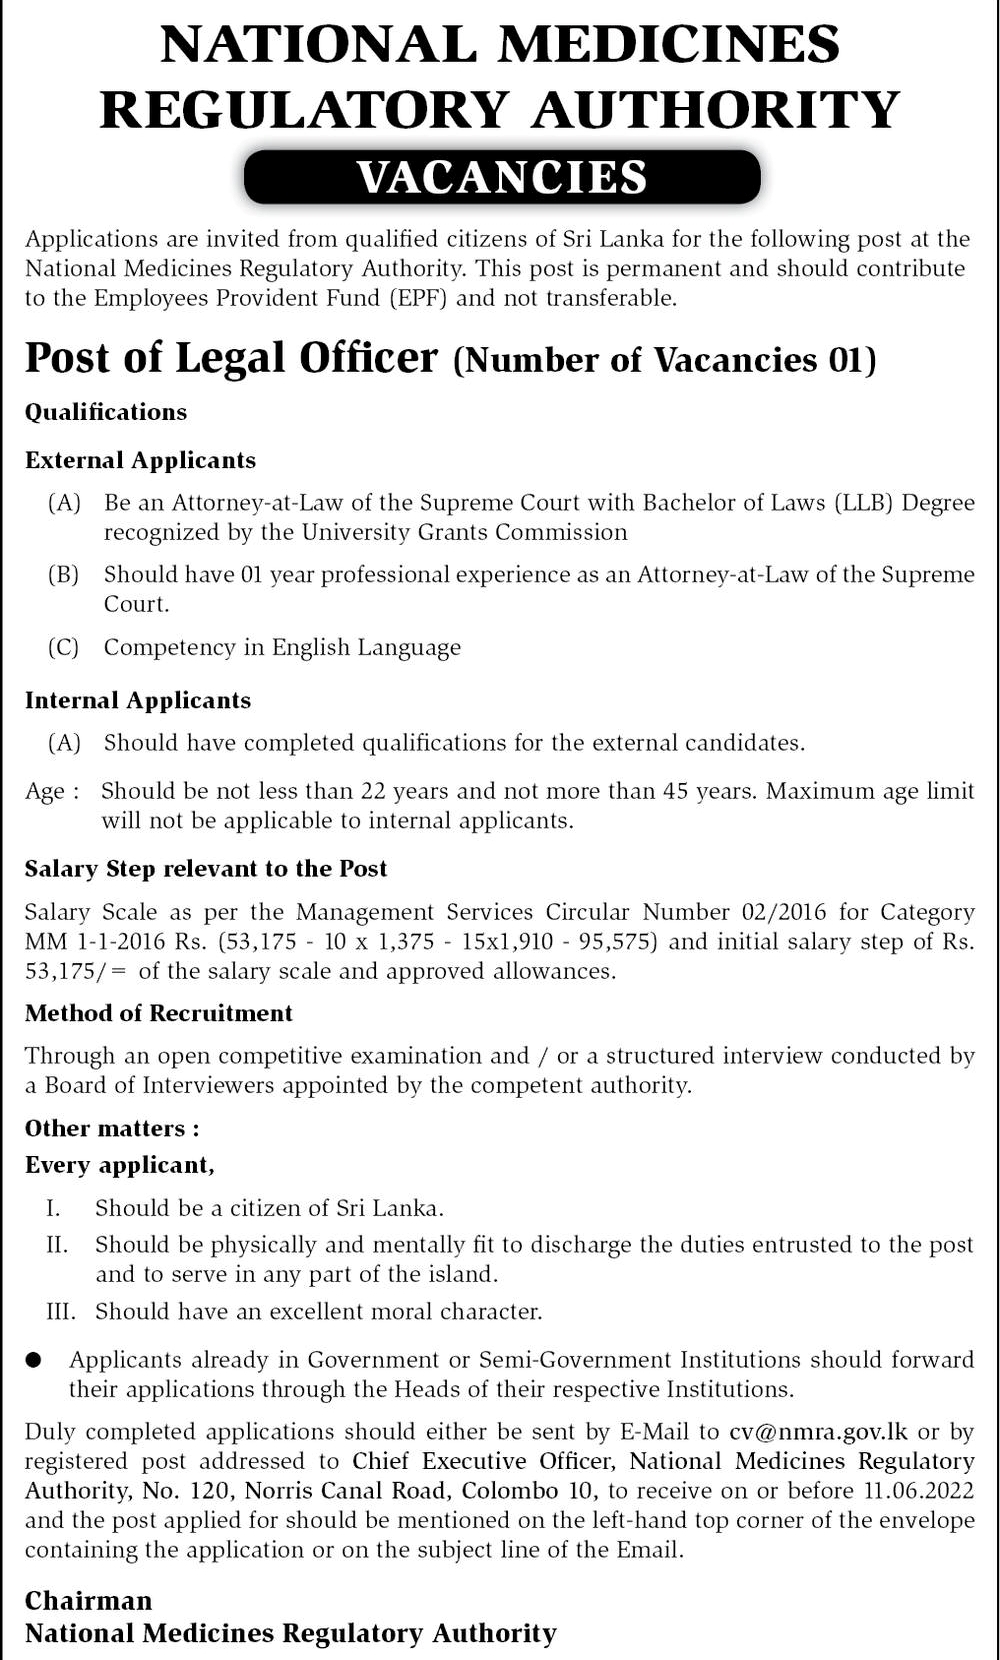 Legal Officer Vacancy - National Medicines Regulatory Authority Jobs Vacancies